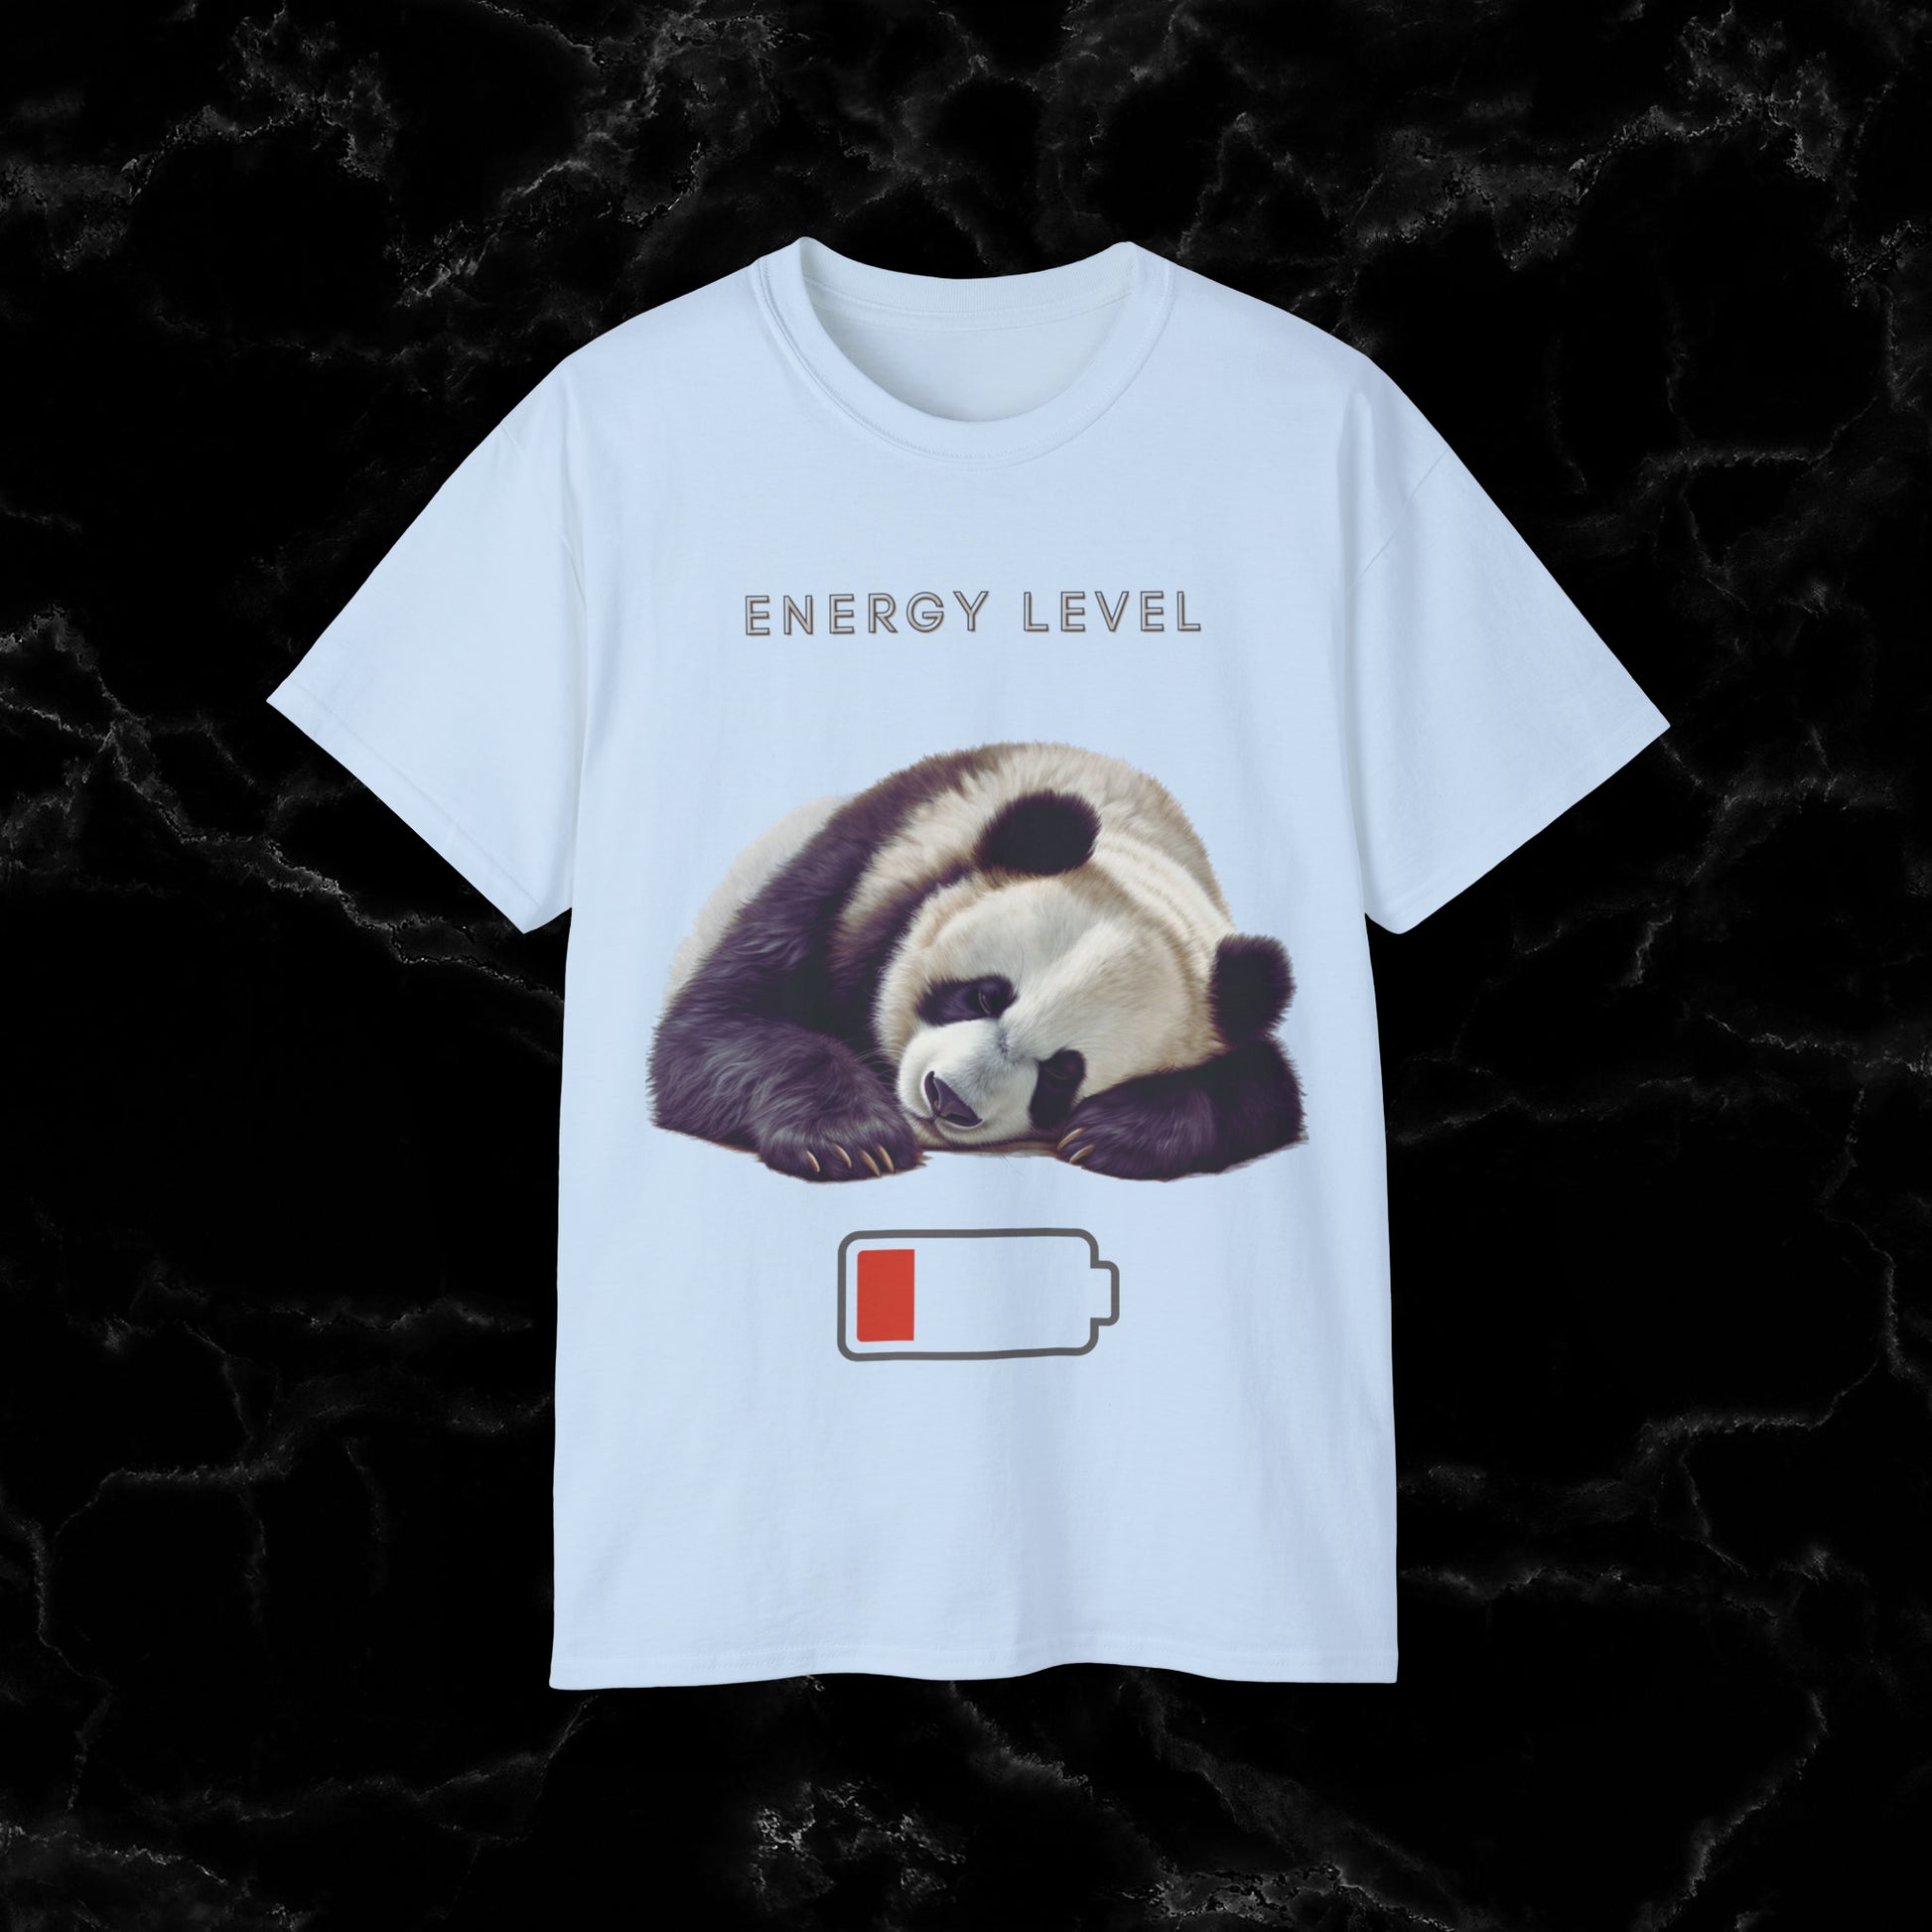 Nap Time Panda Unisex Funny Tee - Hilarious Panda Nap Design - Energy Level T-Shirt Light Blue S 